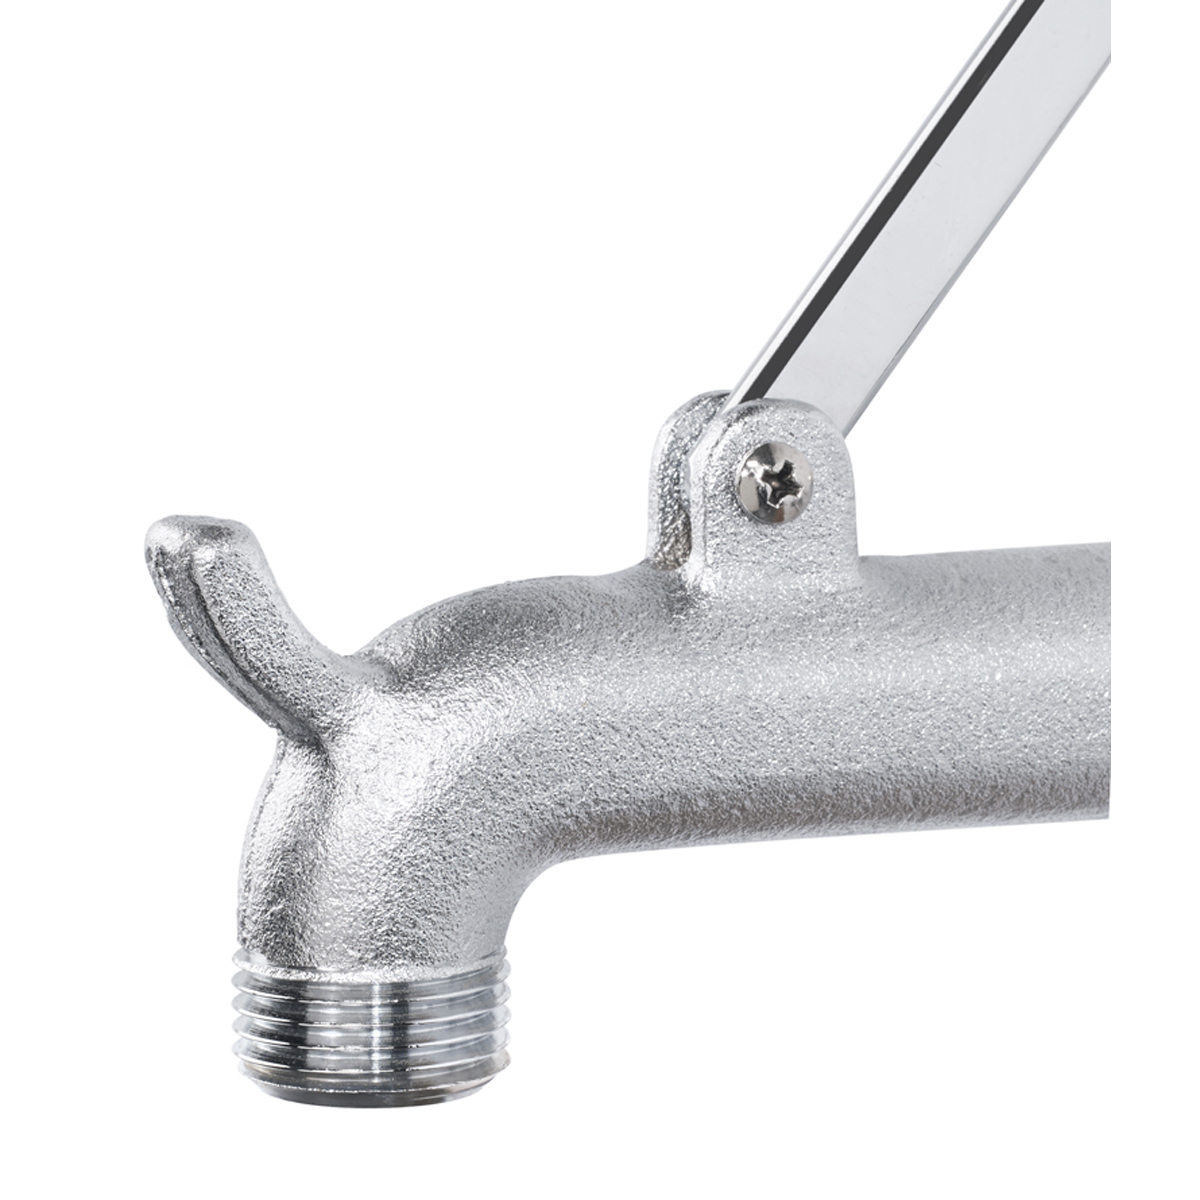 Krowne Metal 16-127 Royal Series Service Faucet image 1